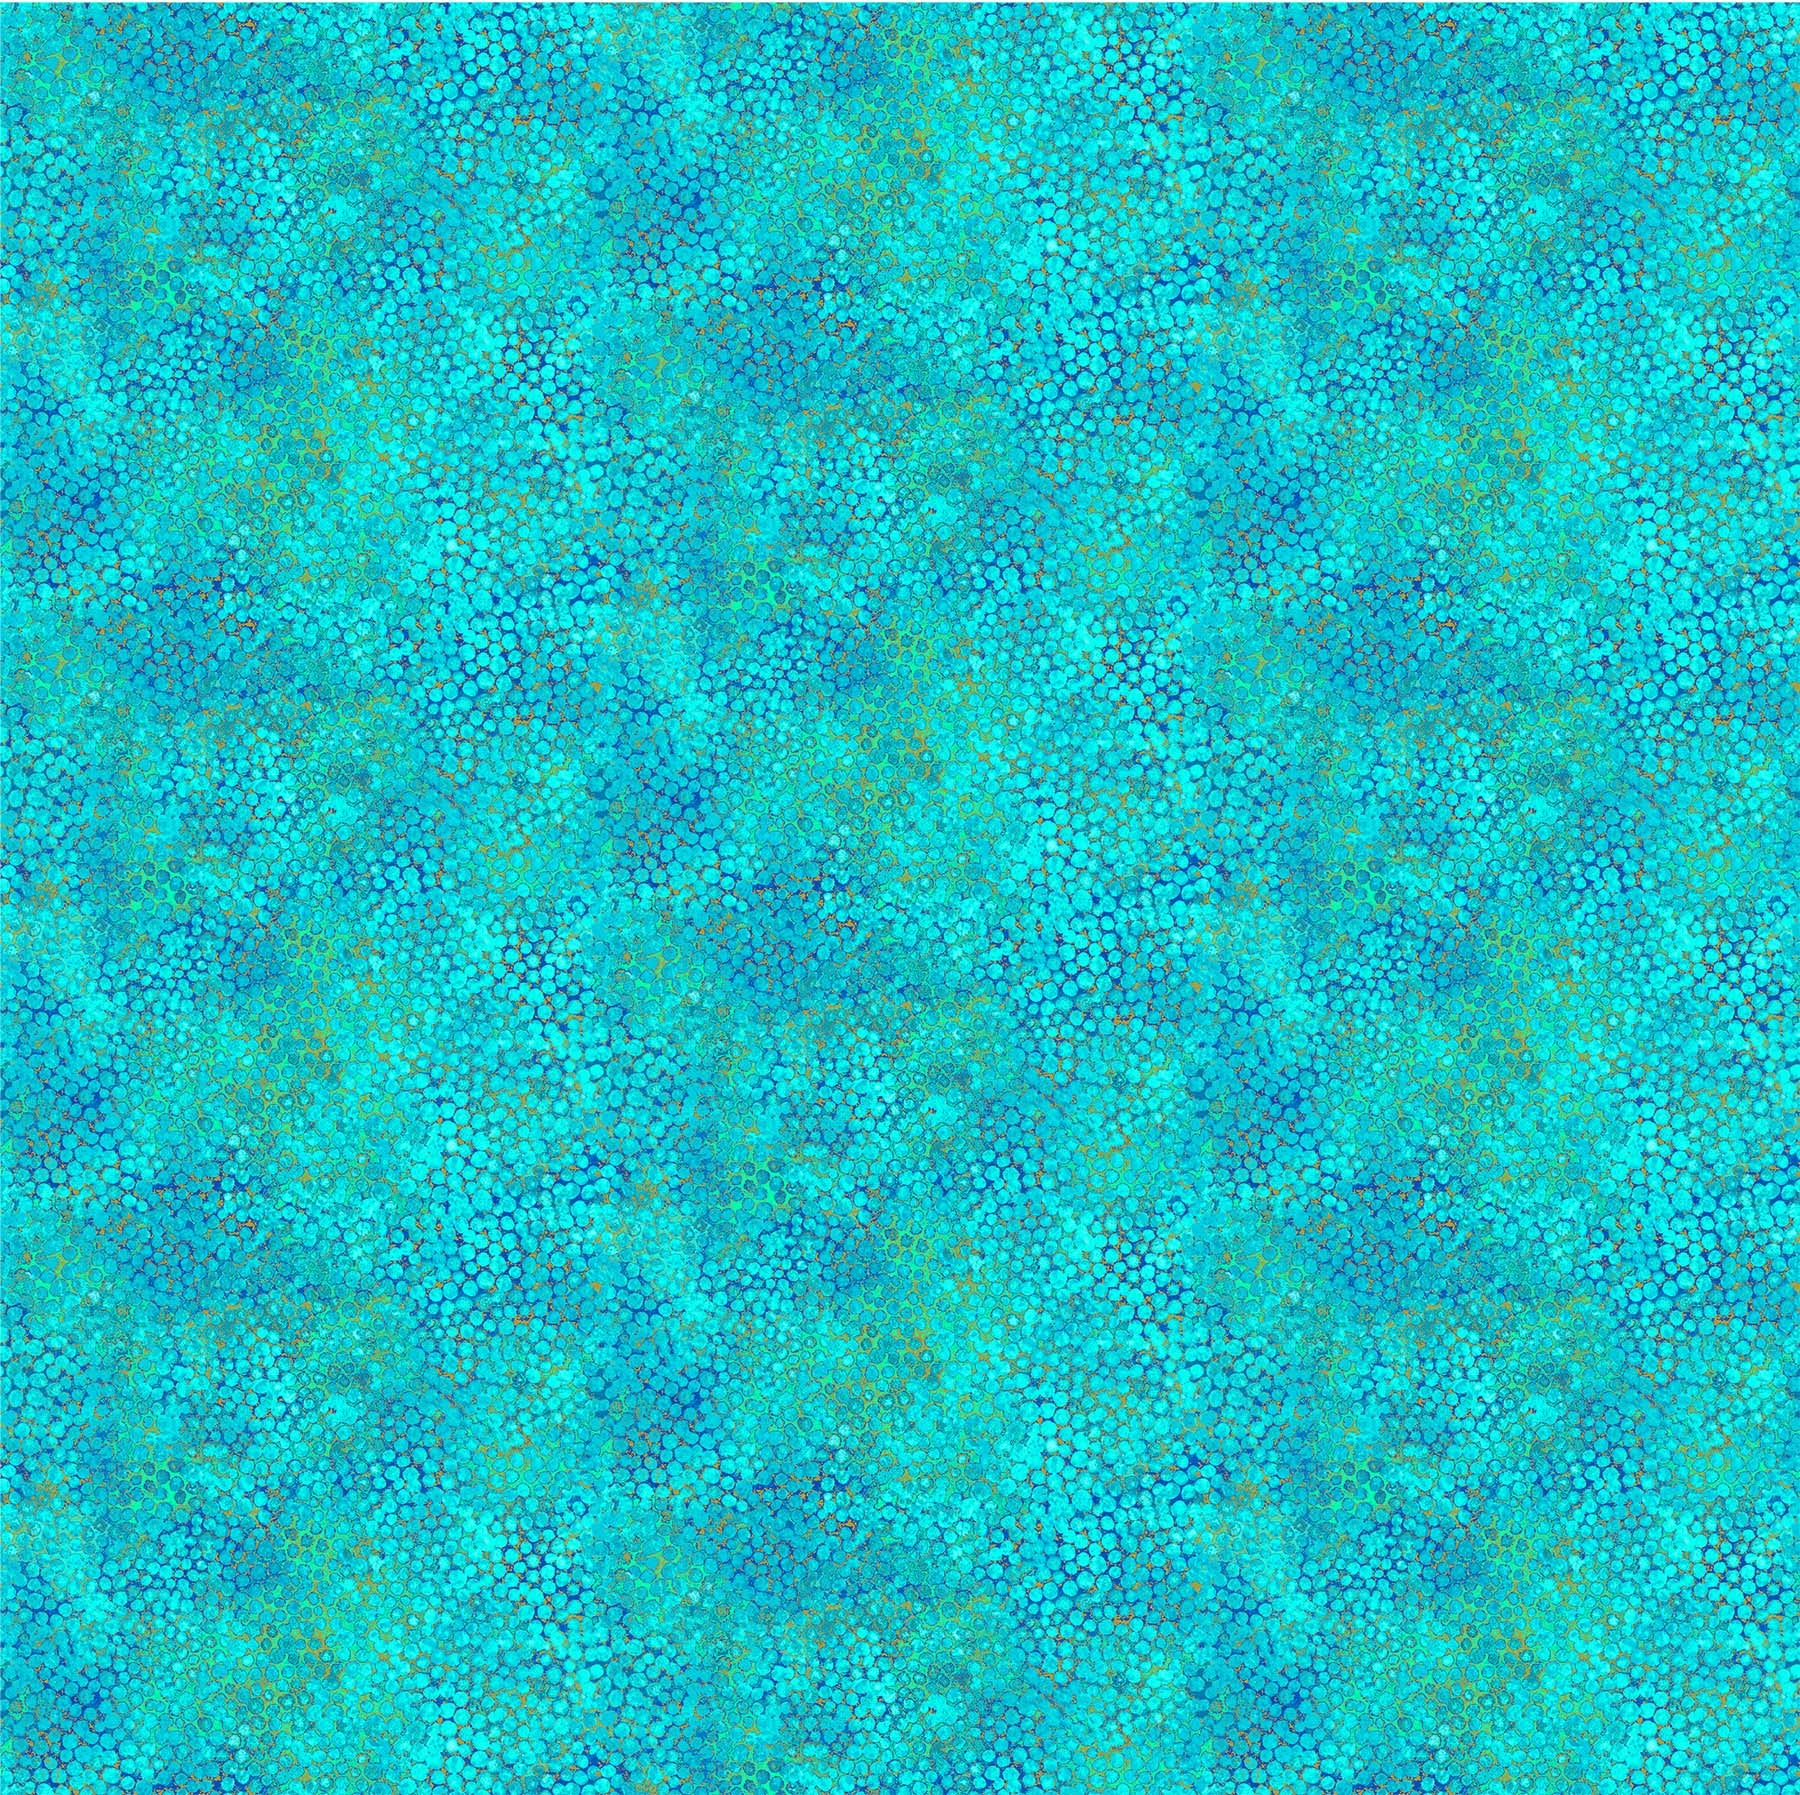 Fabric, Luminosity Turquoise Multi, 24455M-6